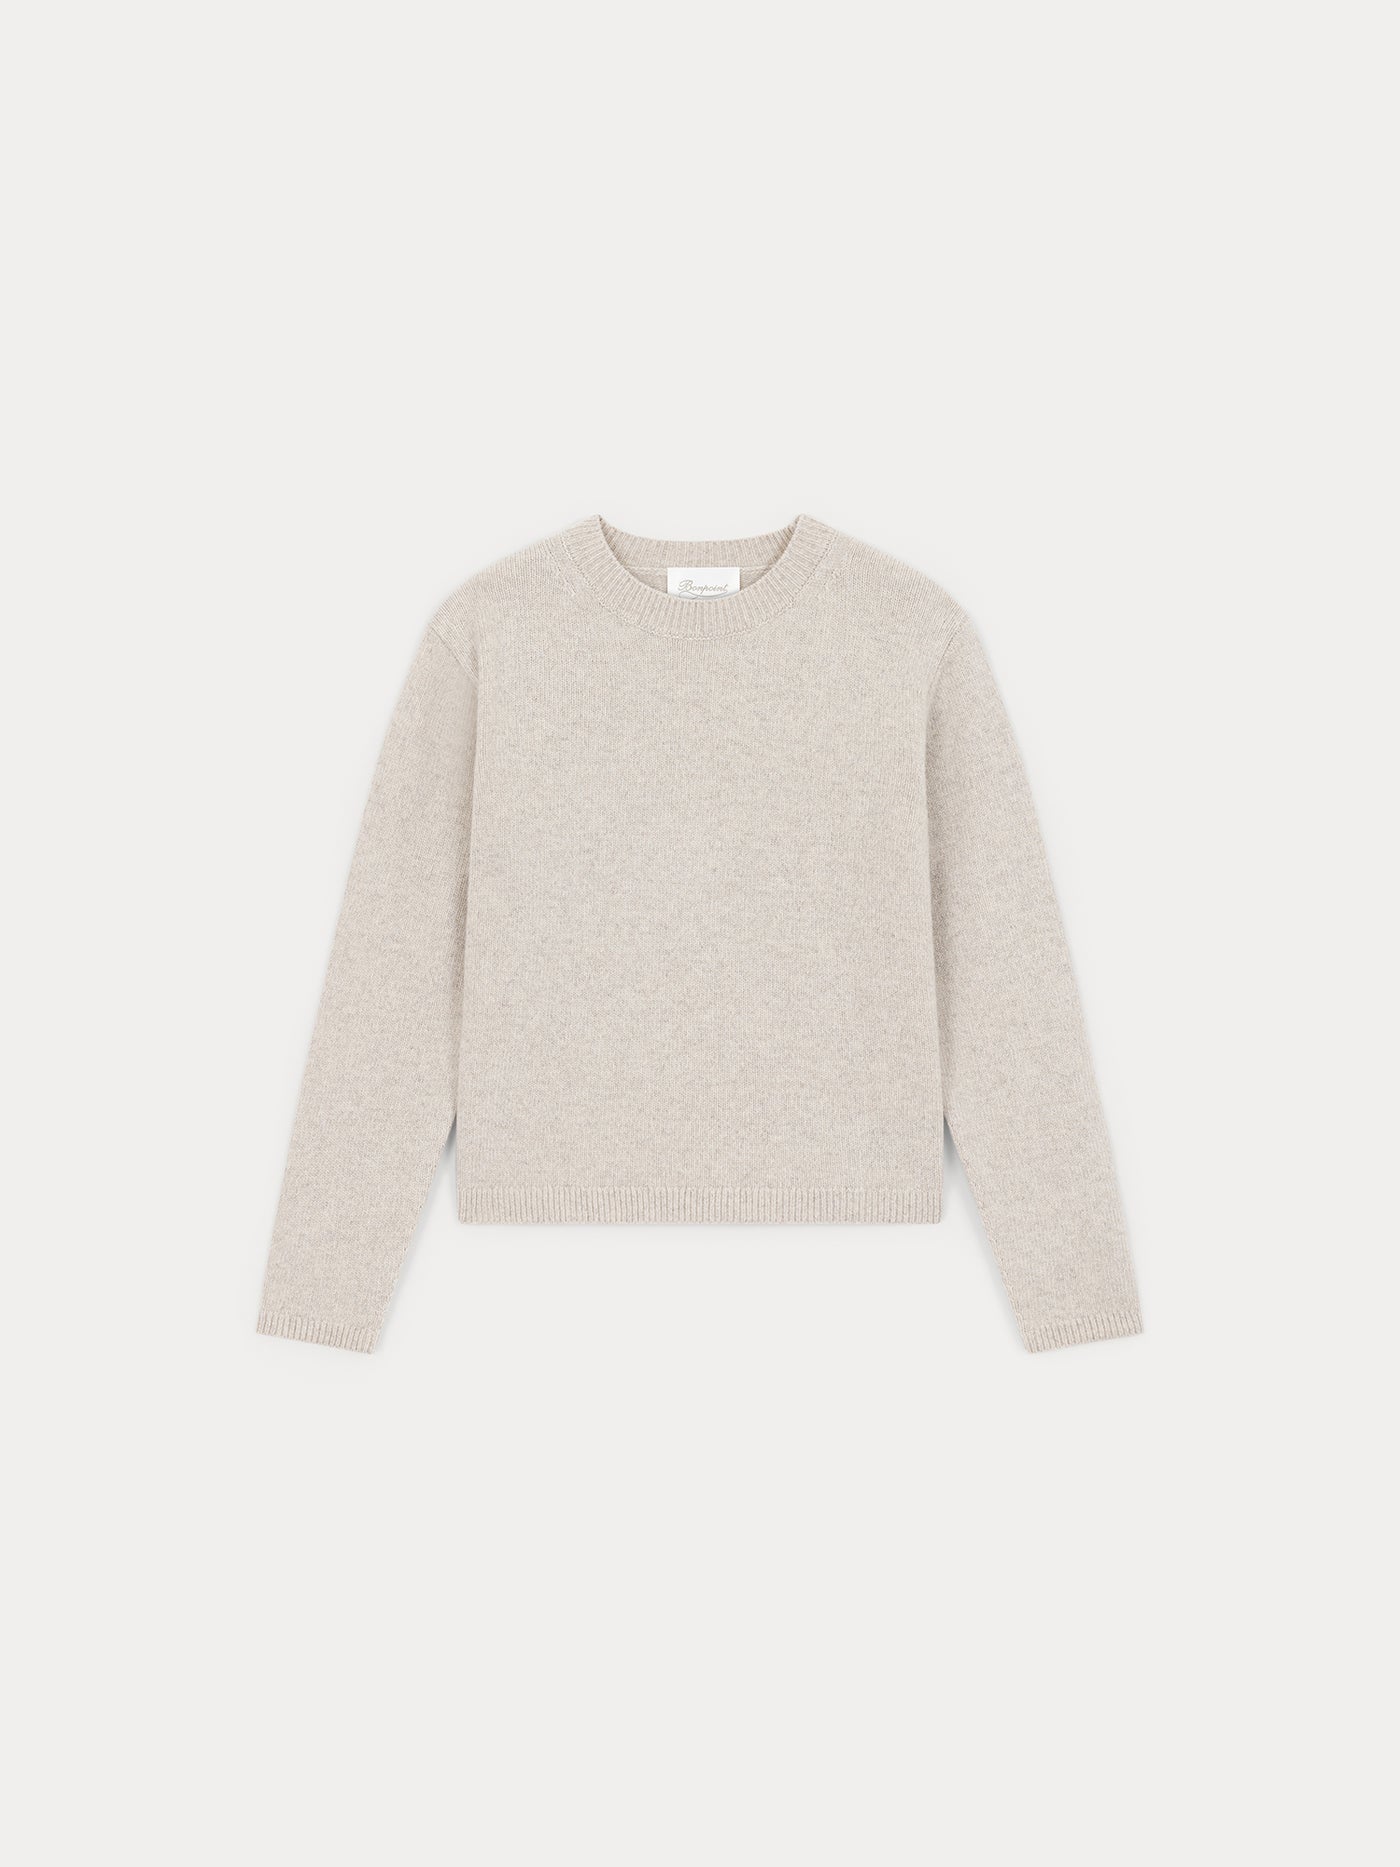 Round-neck heather gray sweater in wool